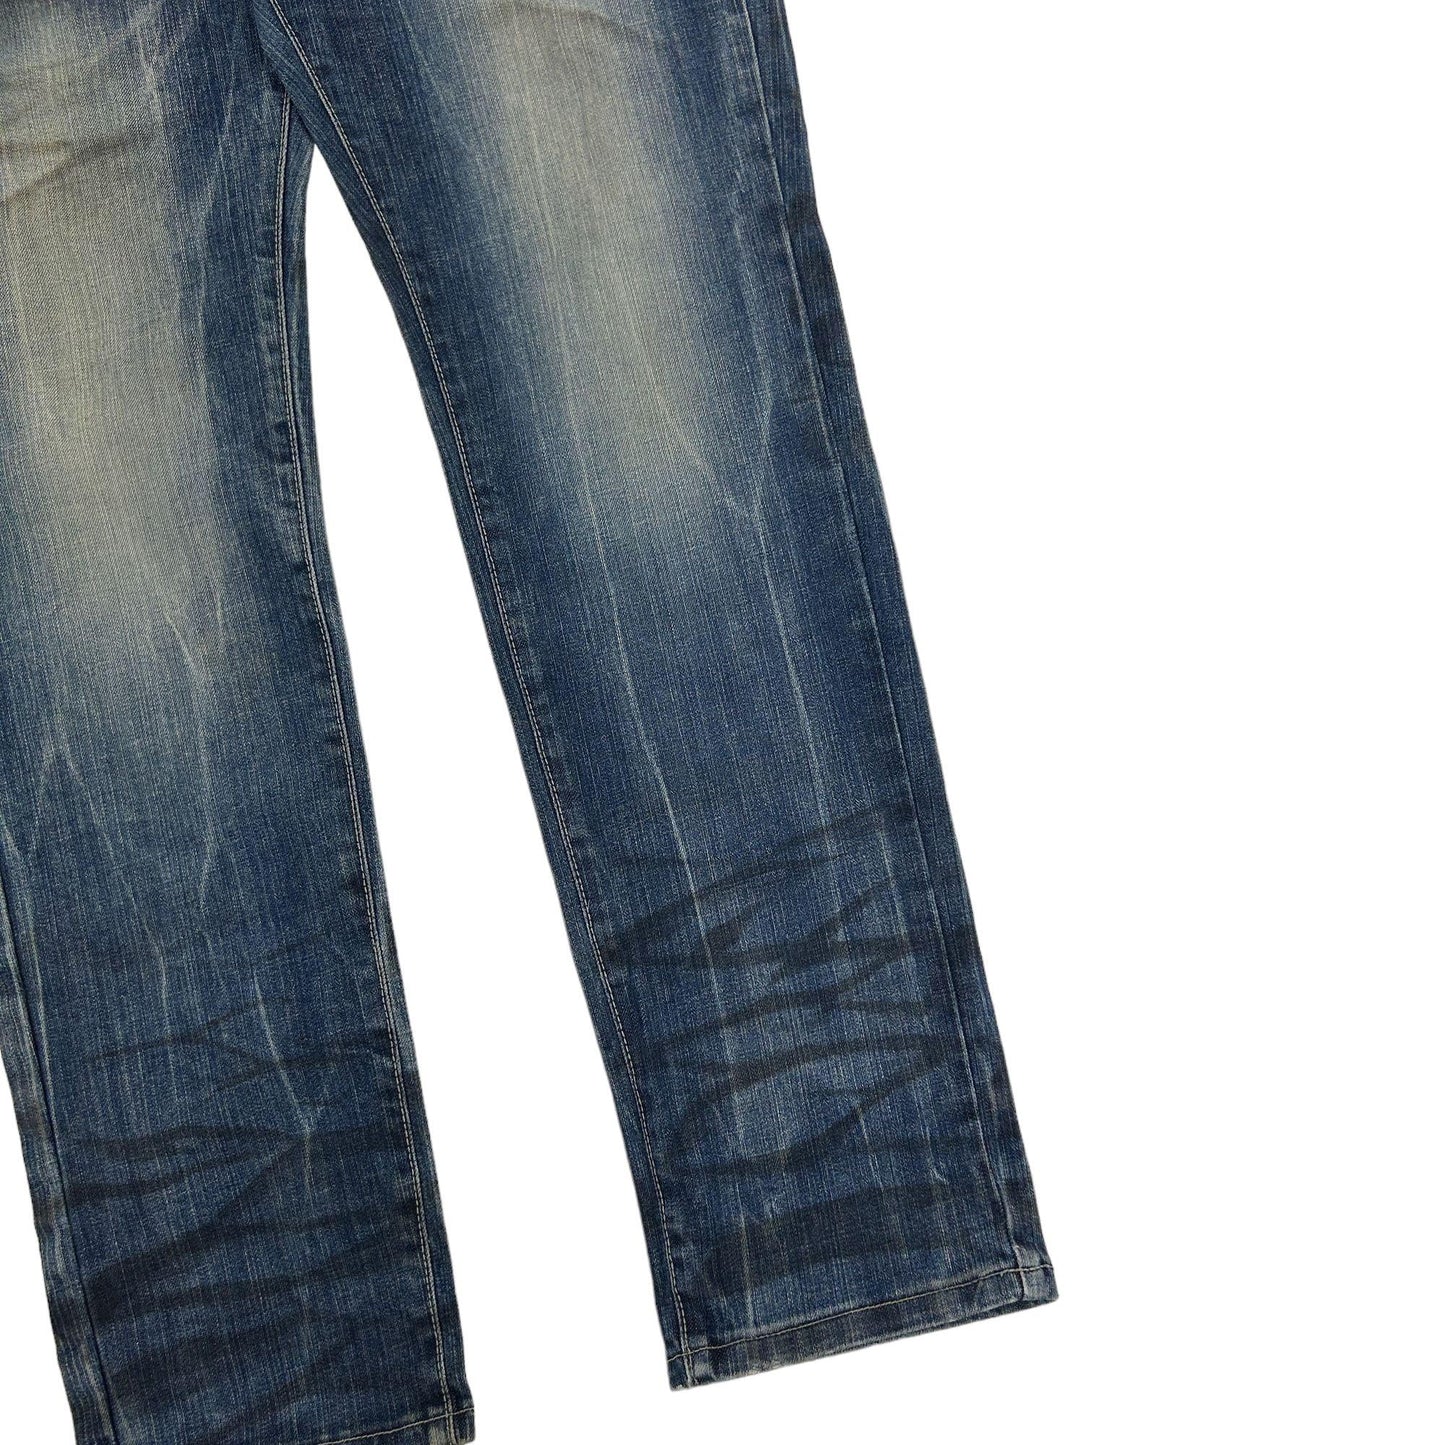 Vintage Monster Japanese Denim Jeans Size W37 - Known Source